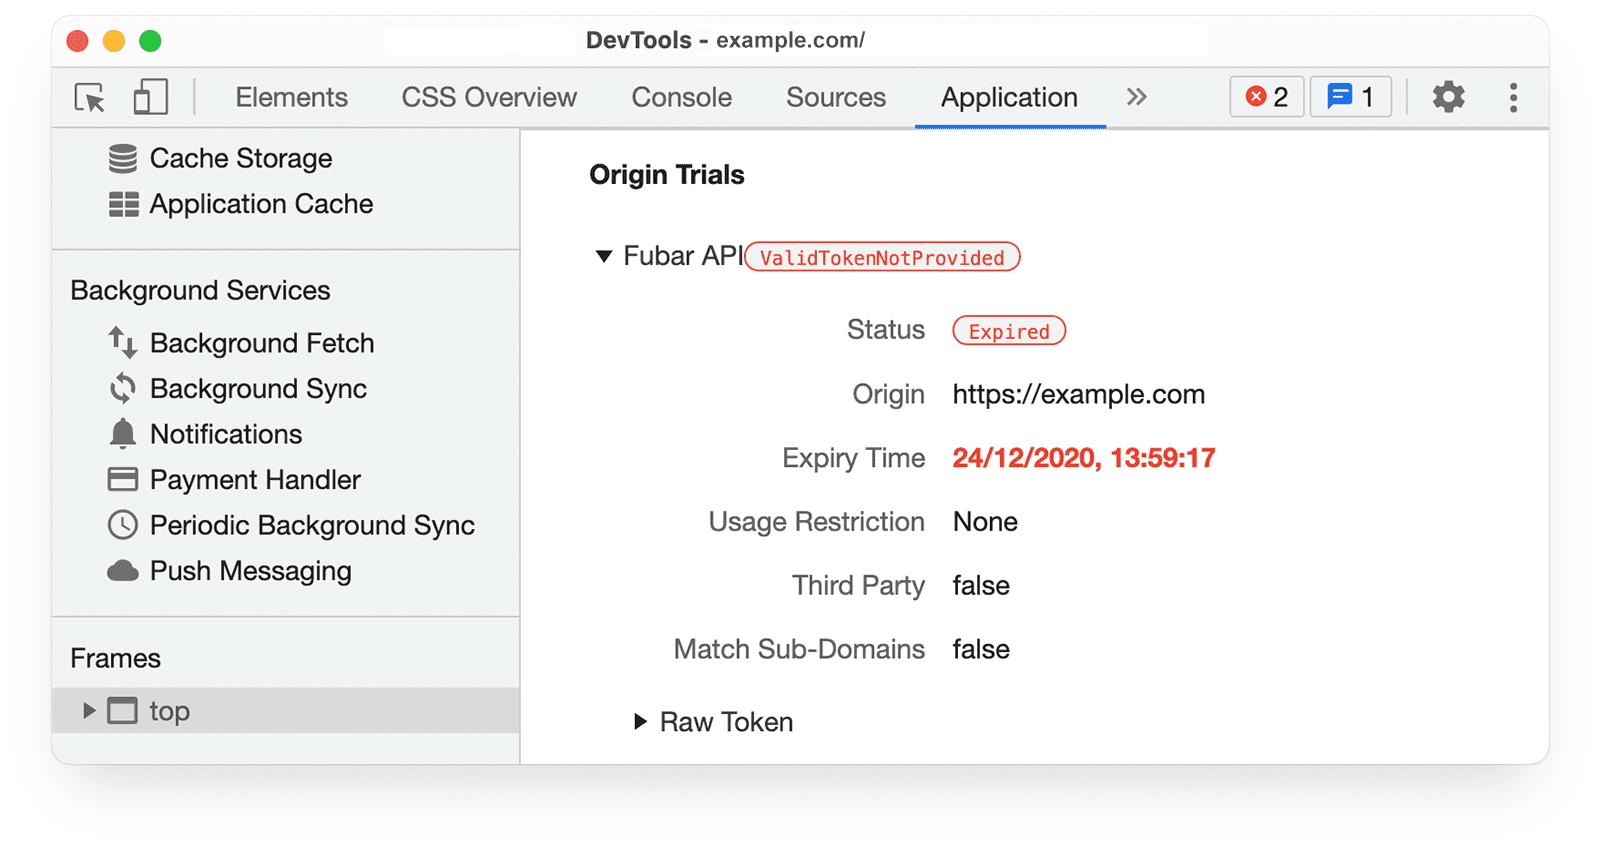 Chrome DevTools 
ValidTokenNotProvided 및 Status Expired가 표시된 Application 패널의 오리진 트라이얼 정보